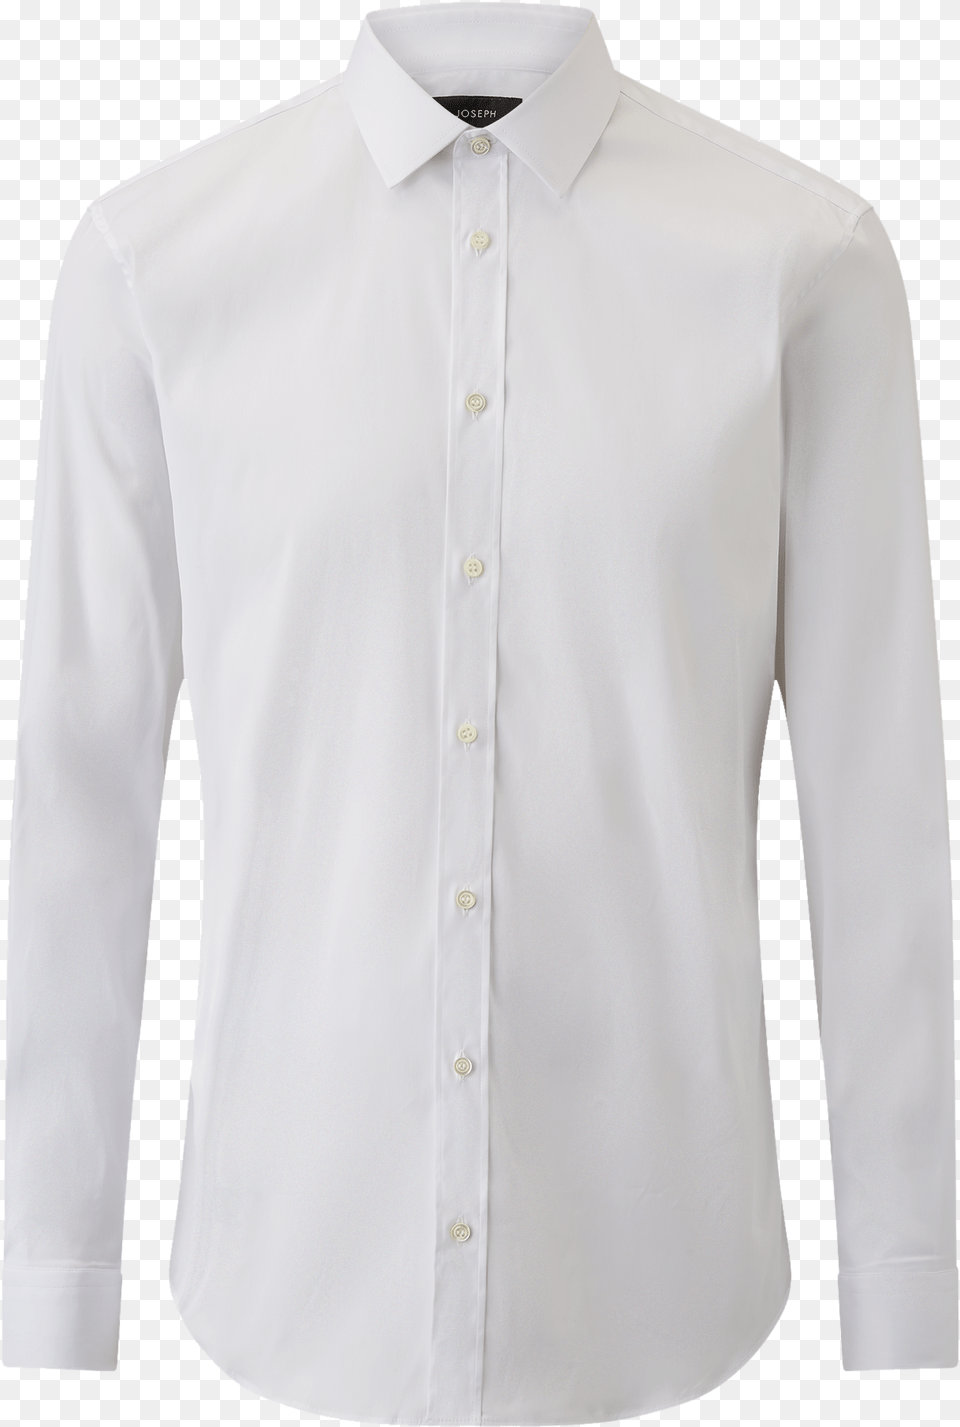 Joseph Jim Poplin Stretch Shirt In White Formal Wear, Clothing, Dress Shirt, Long Sleeve, Sleeve Free Transparent Png